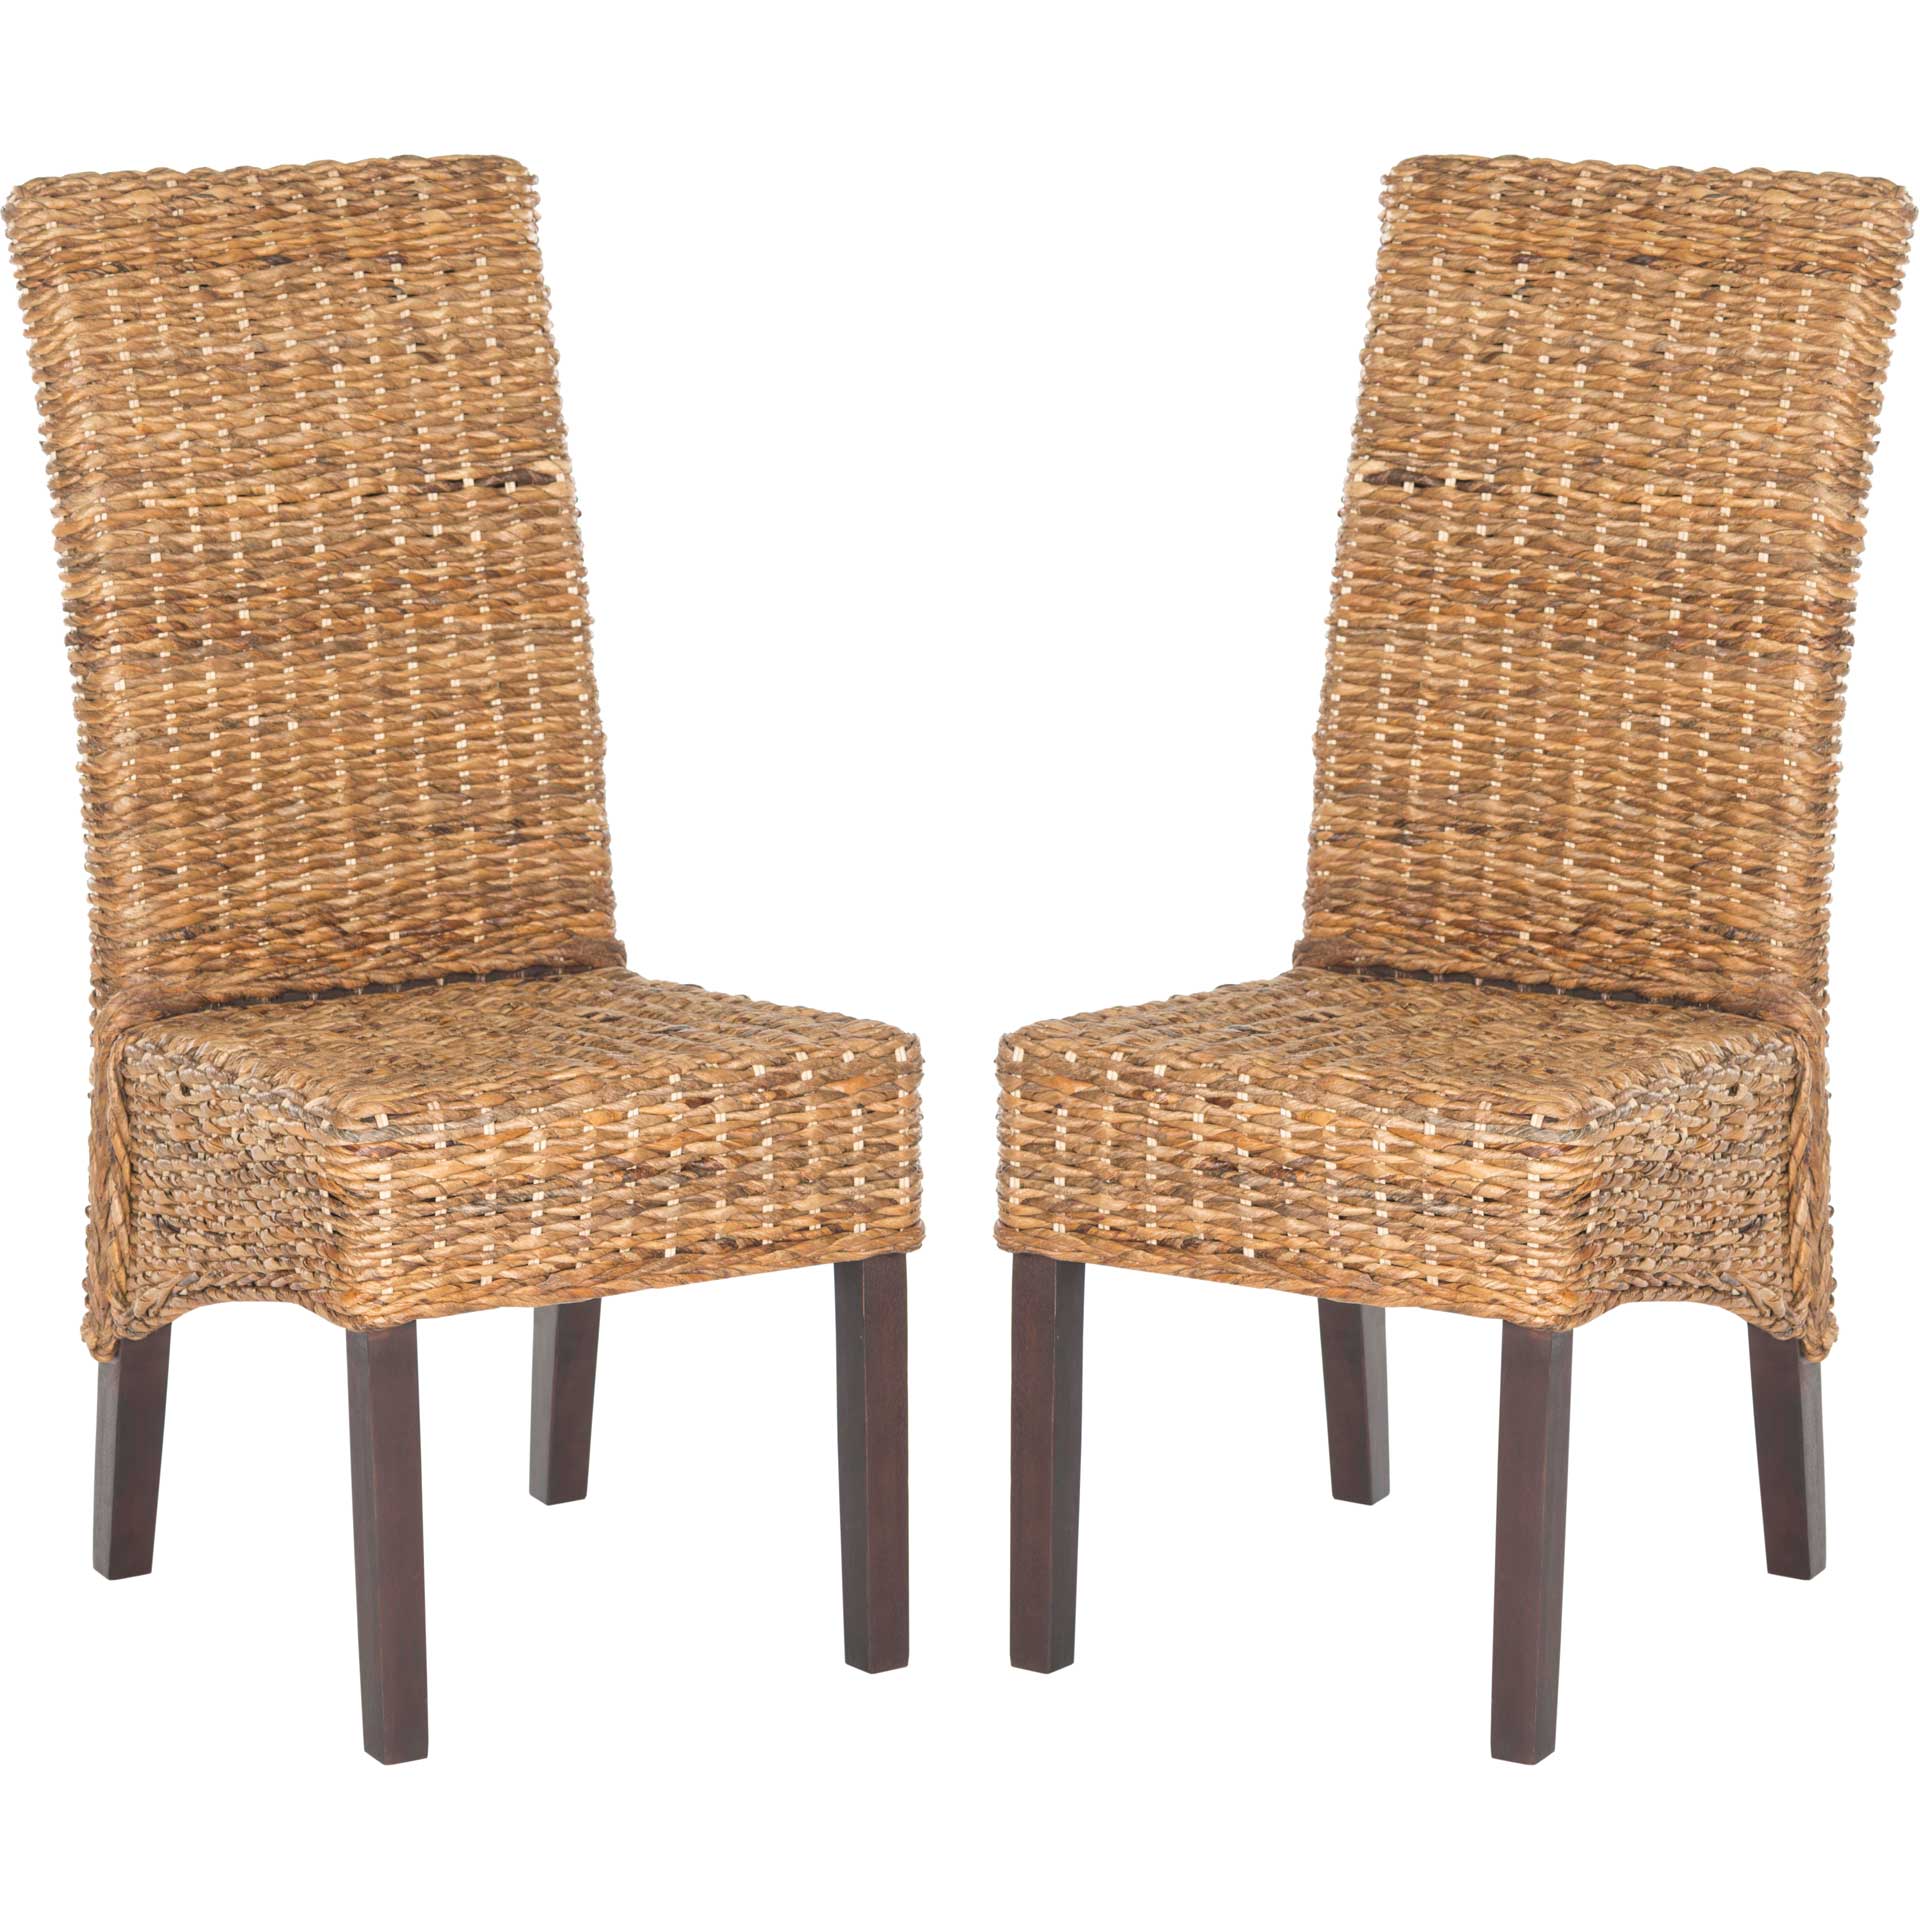 Bahati Side Chair Natural/Dark Brown (Set of 2)